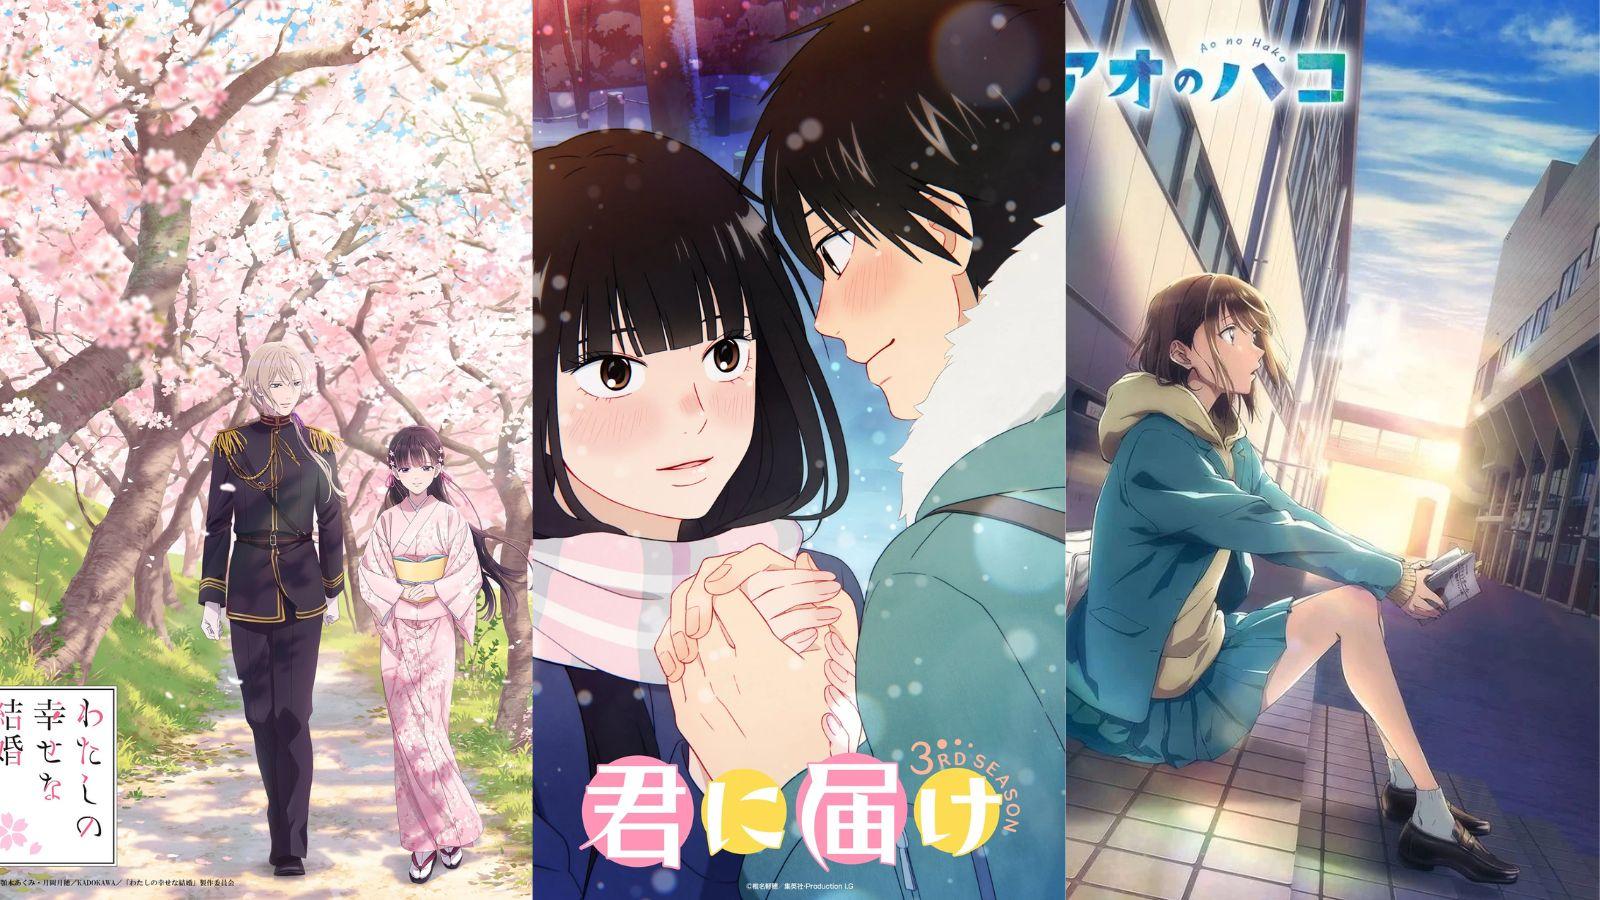 Upcoming Romance Anime series